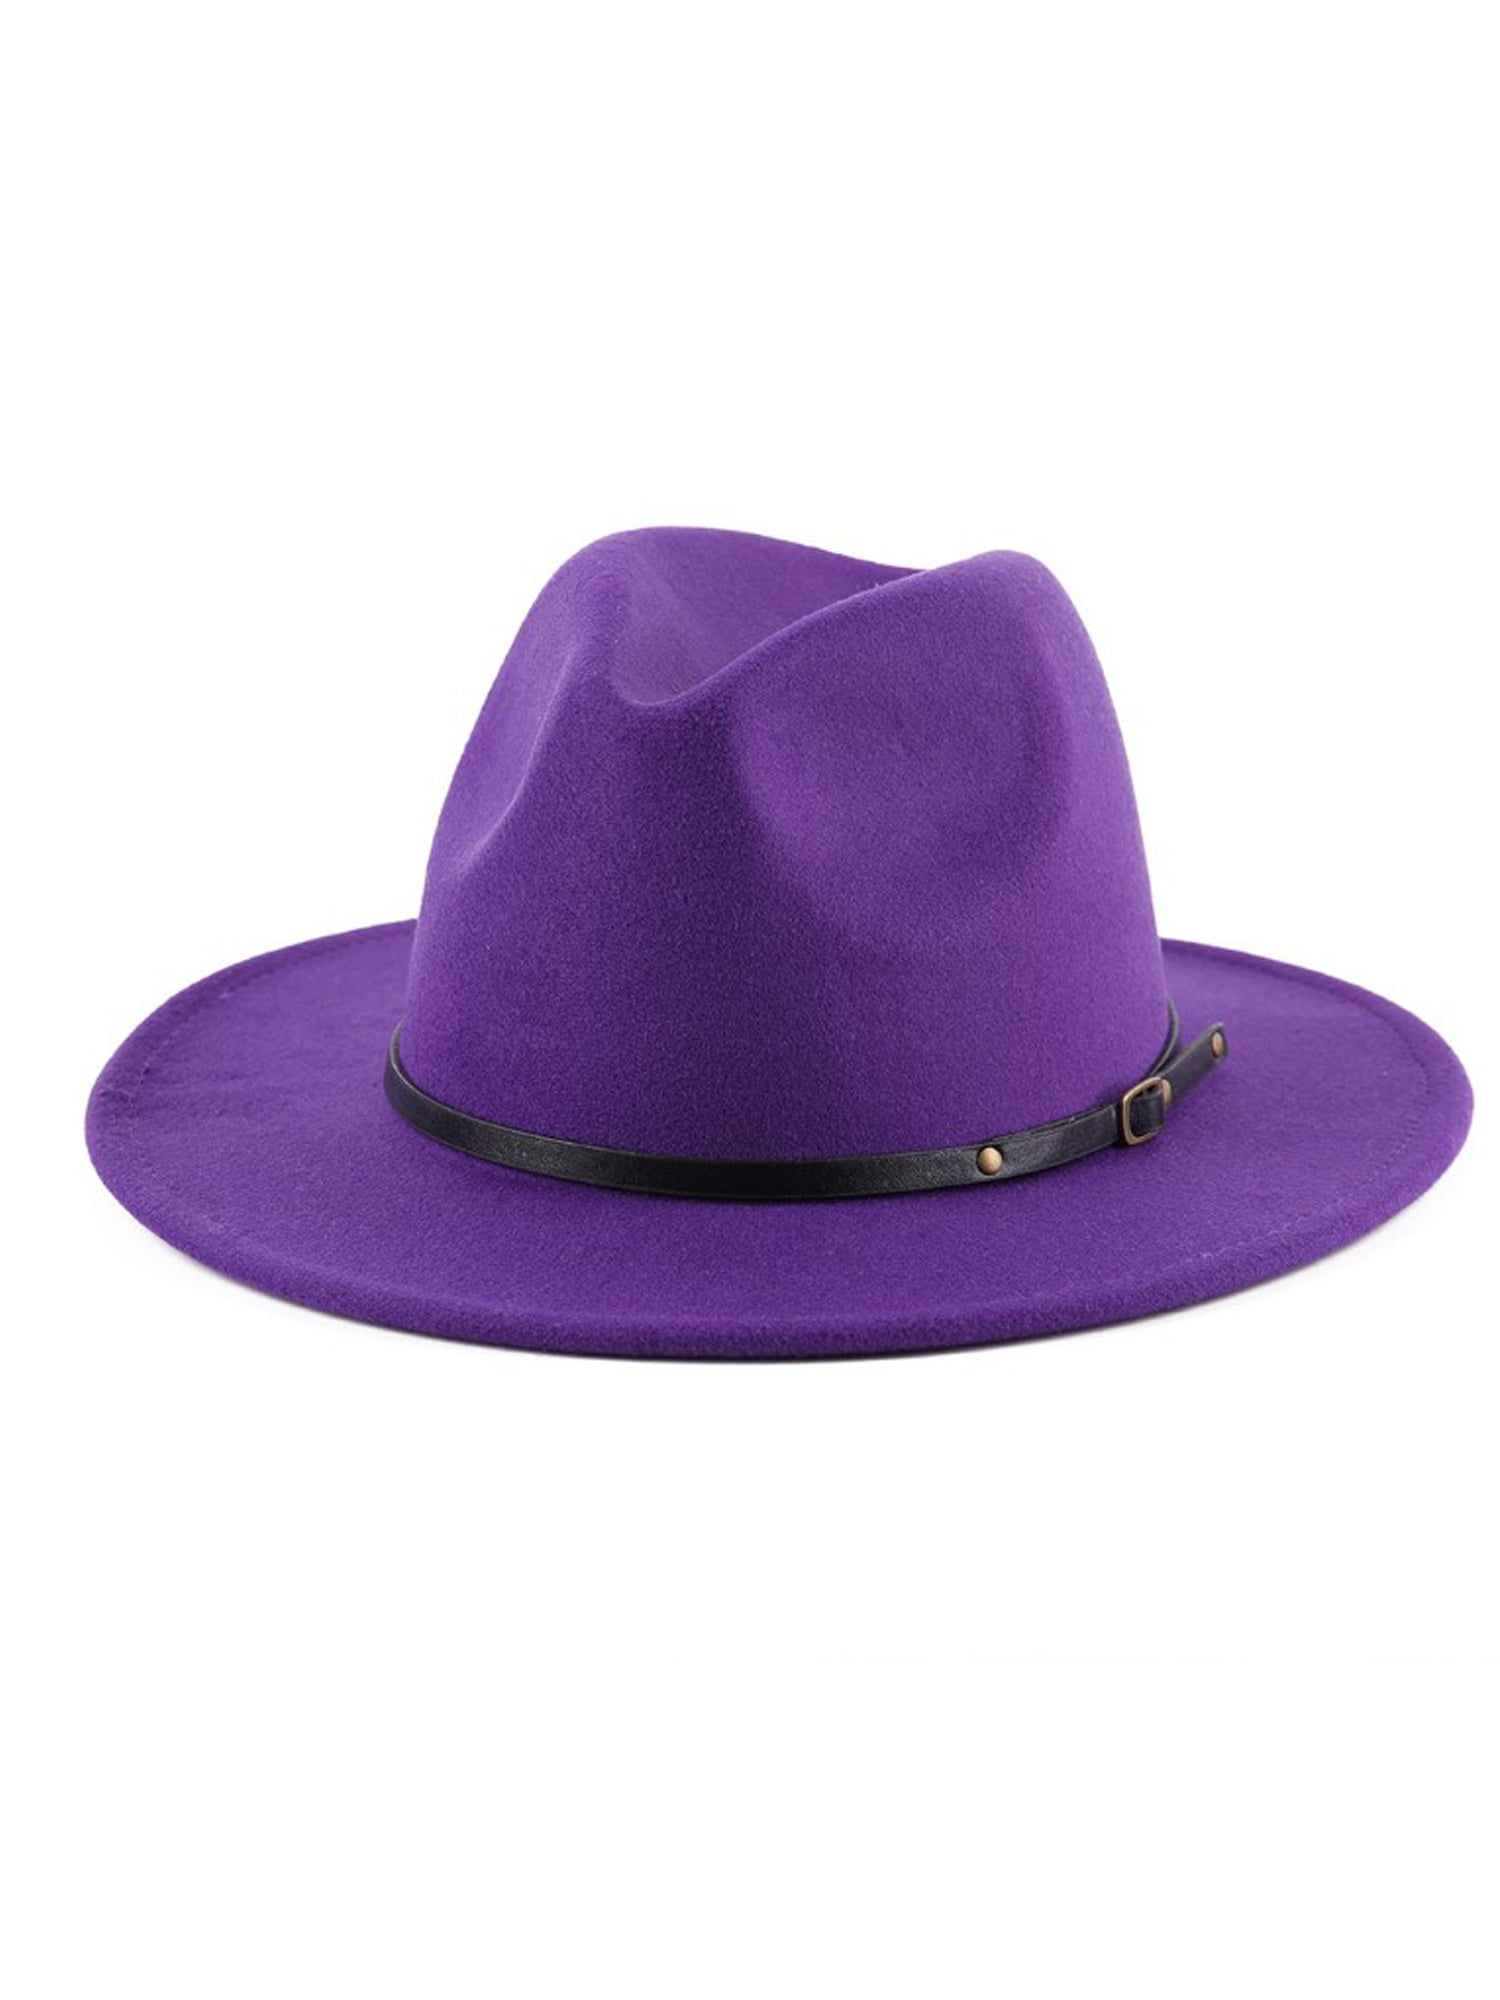 NoName hat and cap WOMEN FASHION Accessories Hat and cap Purple Purple Single discount 68% 